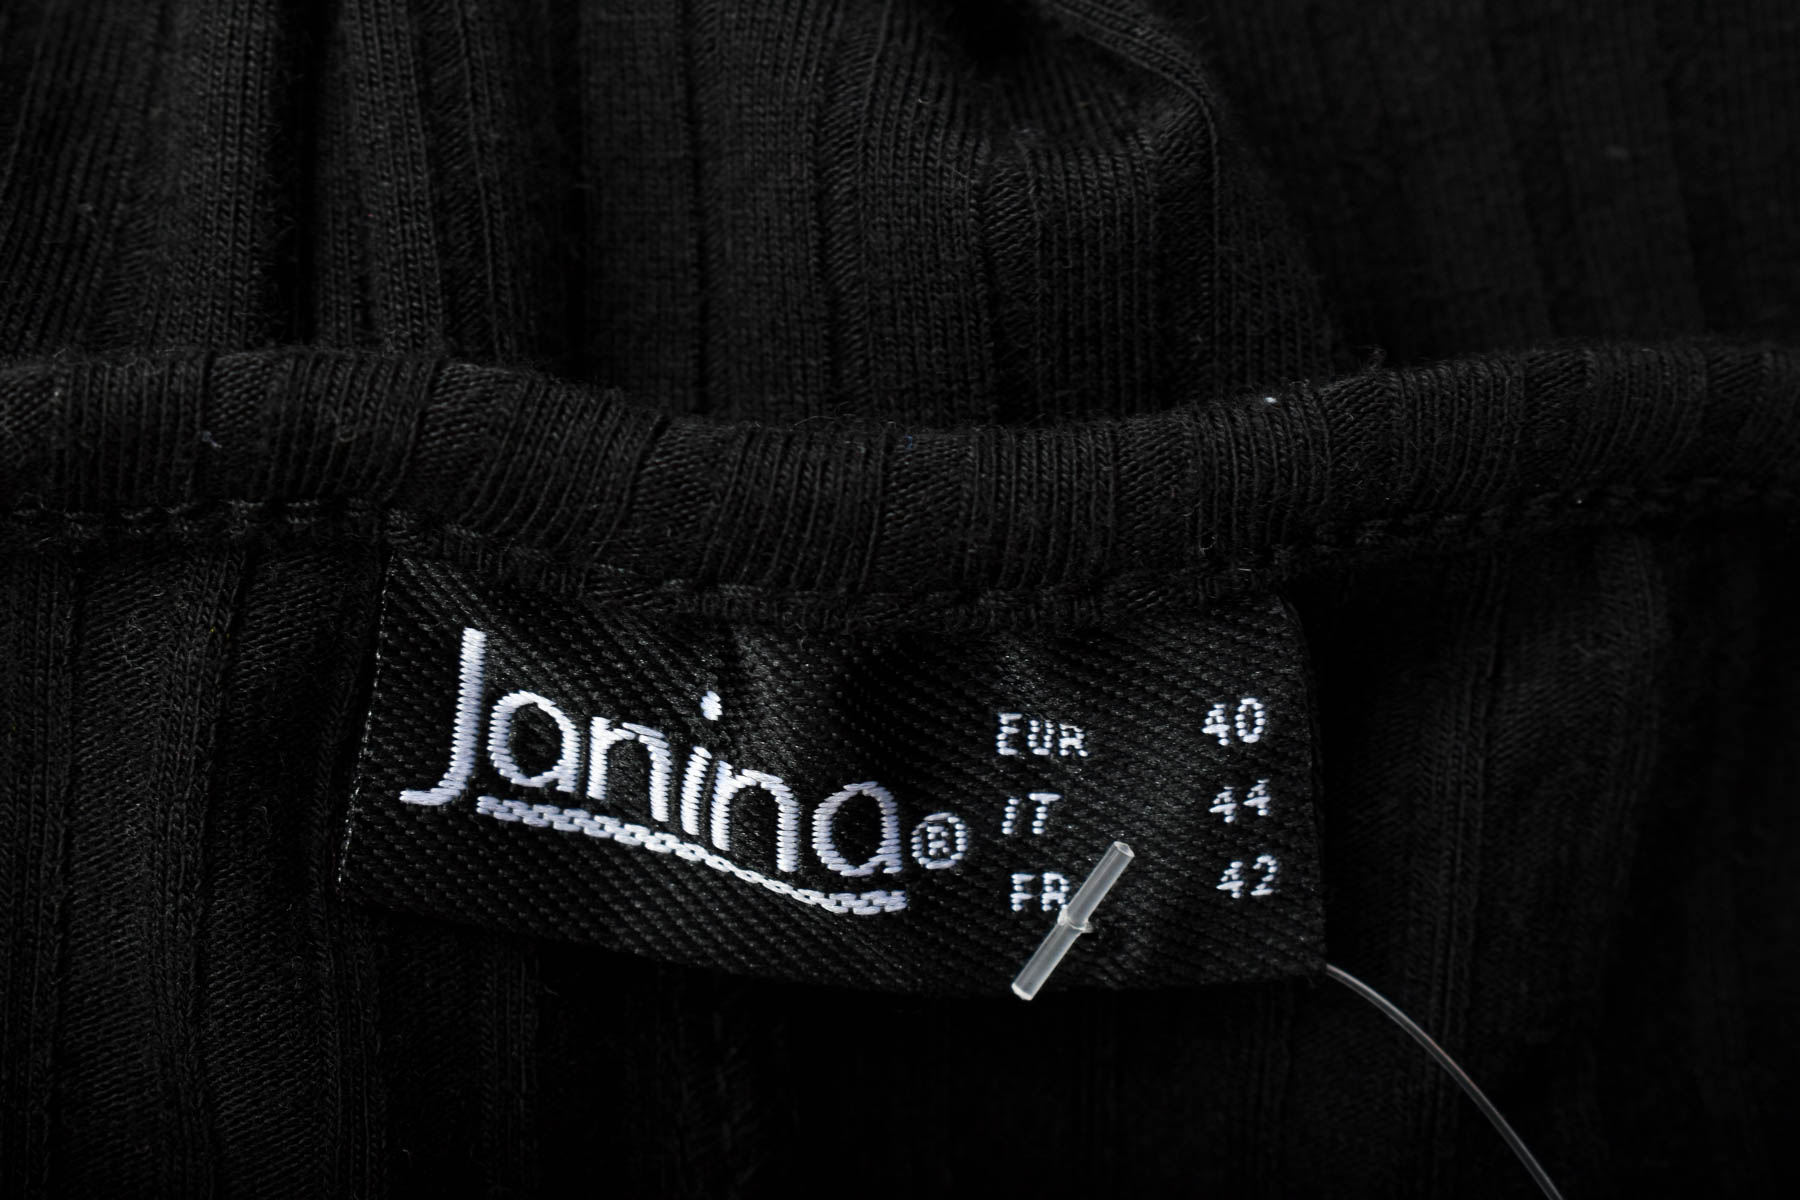 Women's tunic - Janina - 2